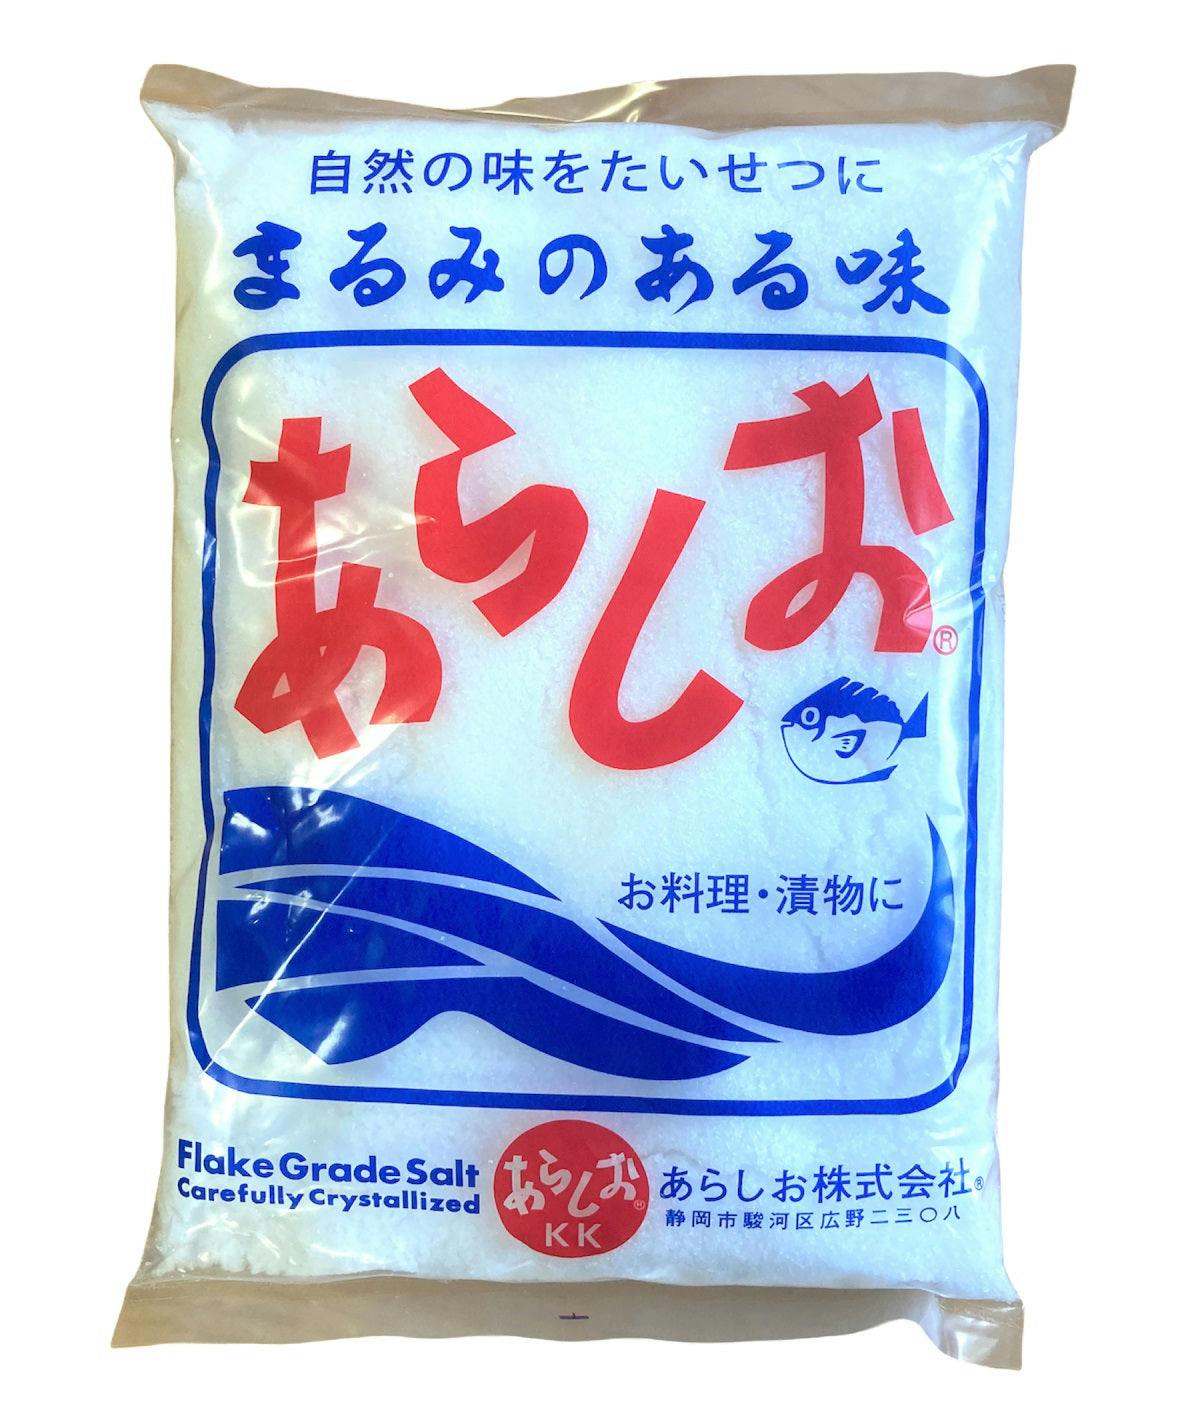 ARASHIO Flake Grade Salt 日本进口 海盐 600g